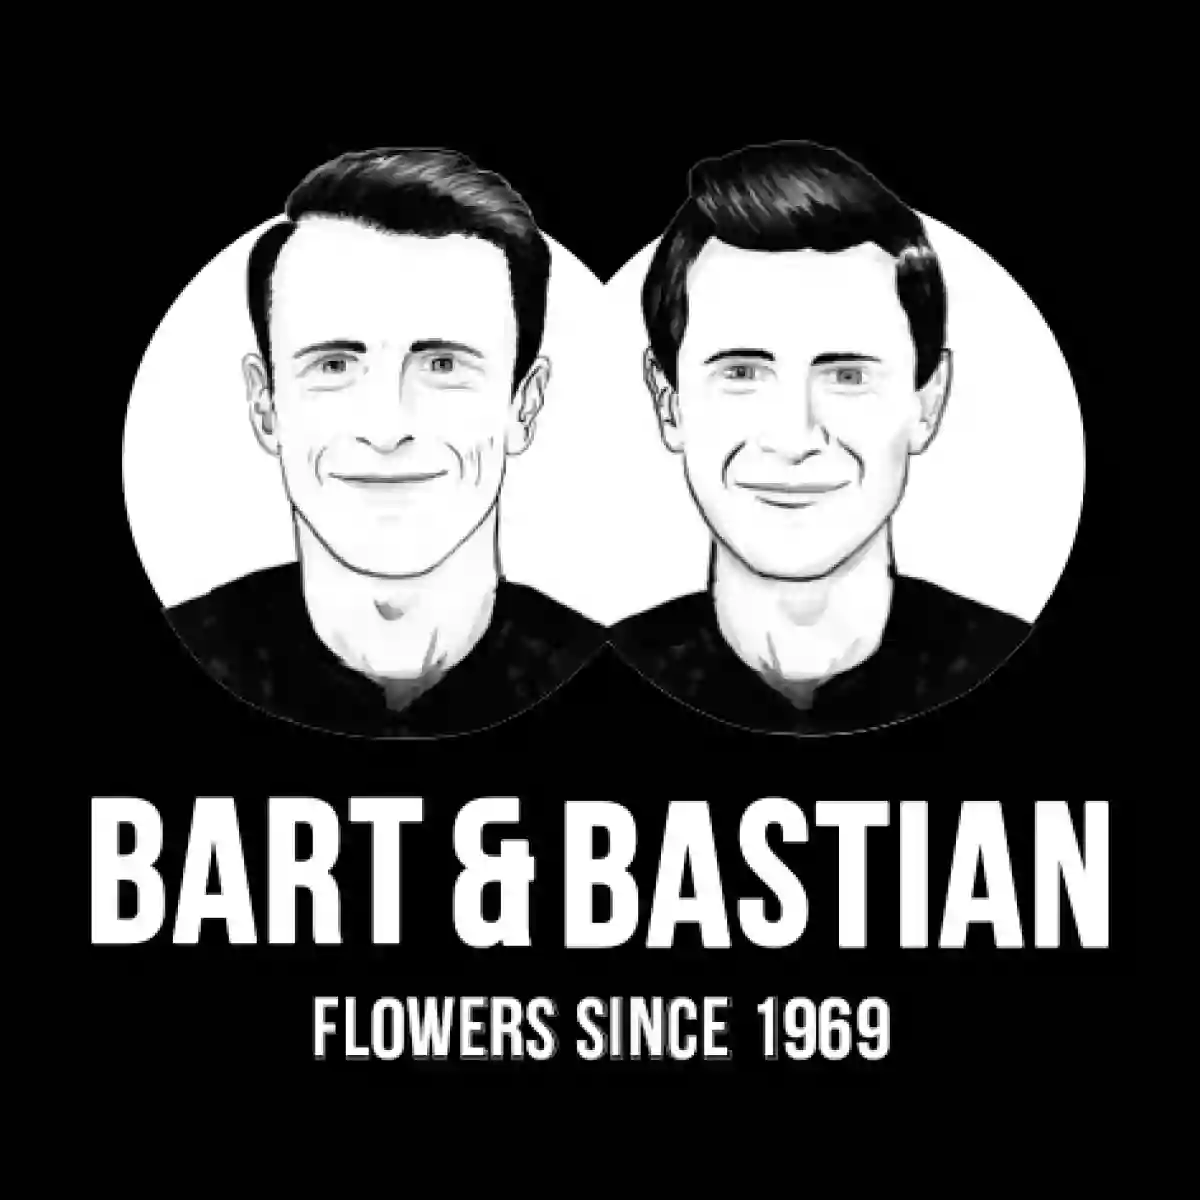 Bart & Bastian Shops St. Wendel